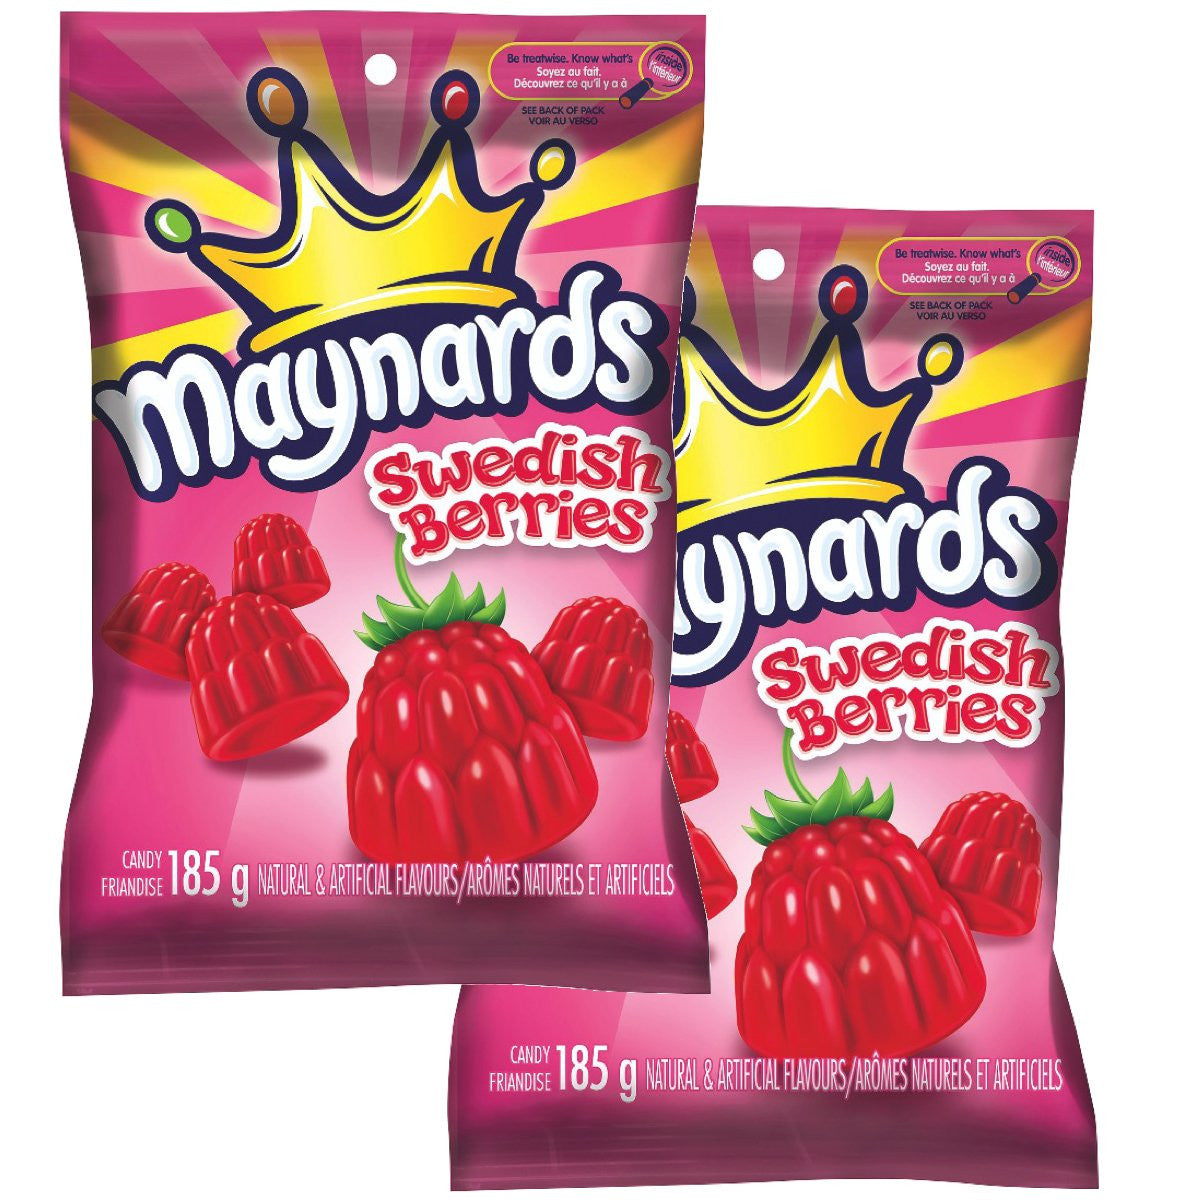 Maynards Swedish Berries 13oz/370g (Pack of two of 6.5oz/185g bag)